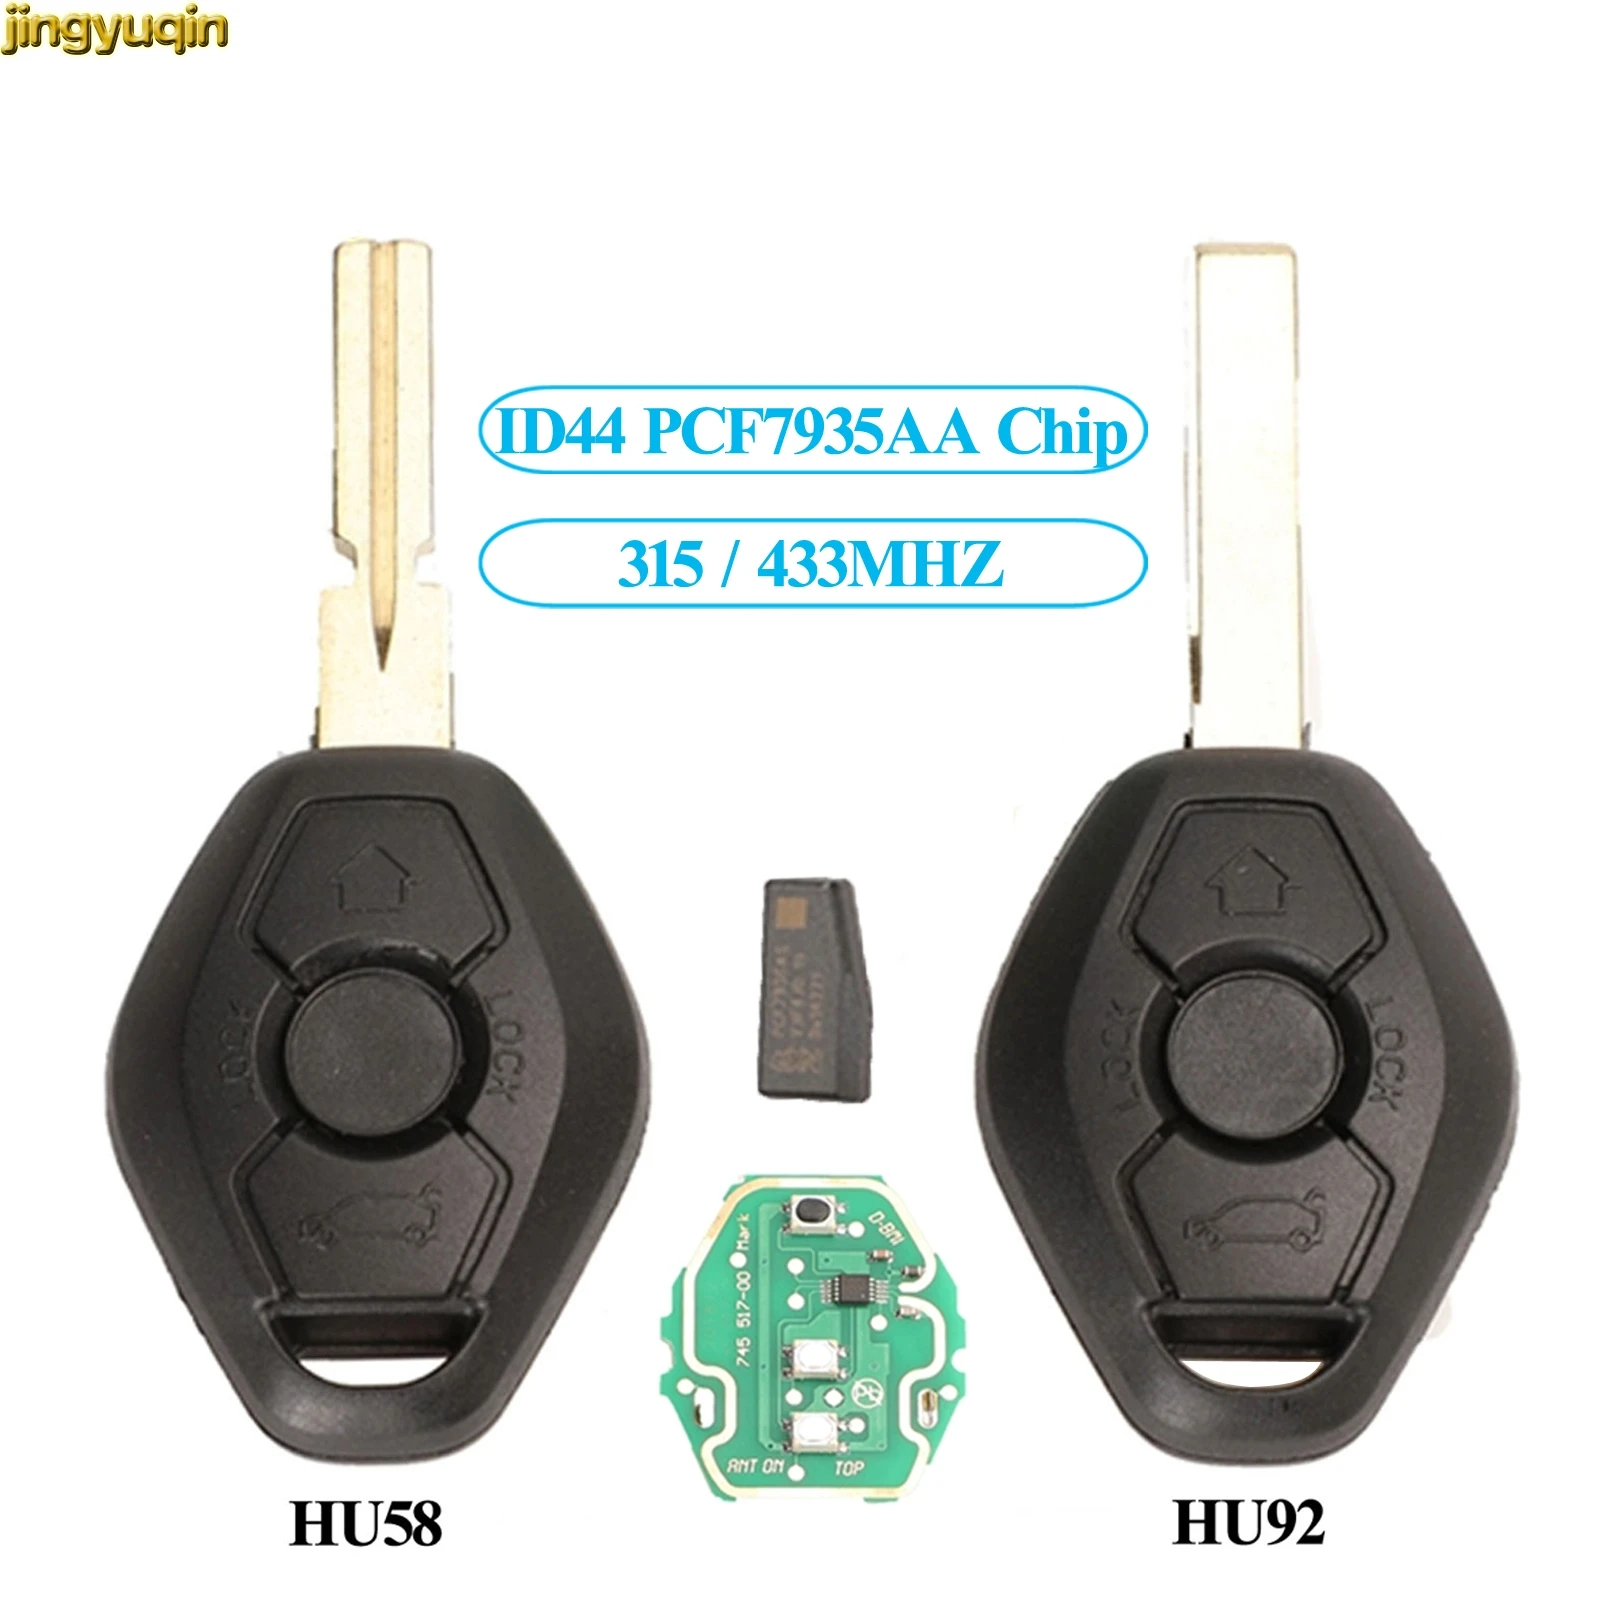 Jingyuqin Remote Control Car Key ASK EWS 433/315MHZ PCF7935AA ID44 Chip For BMW 1 3 5 7 series X3 X5 Z3 Z4 Keyless Entry Fob